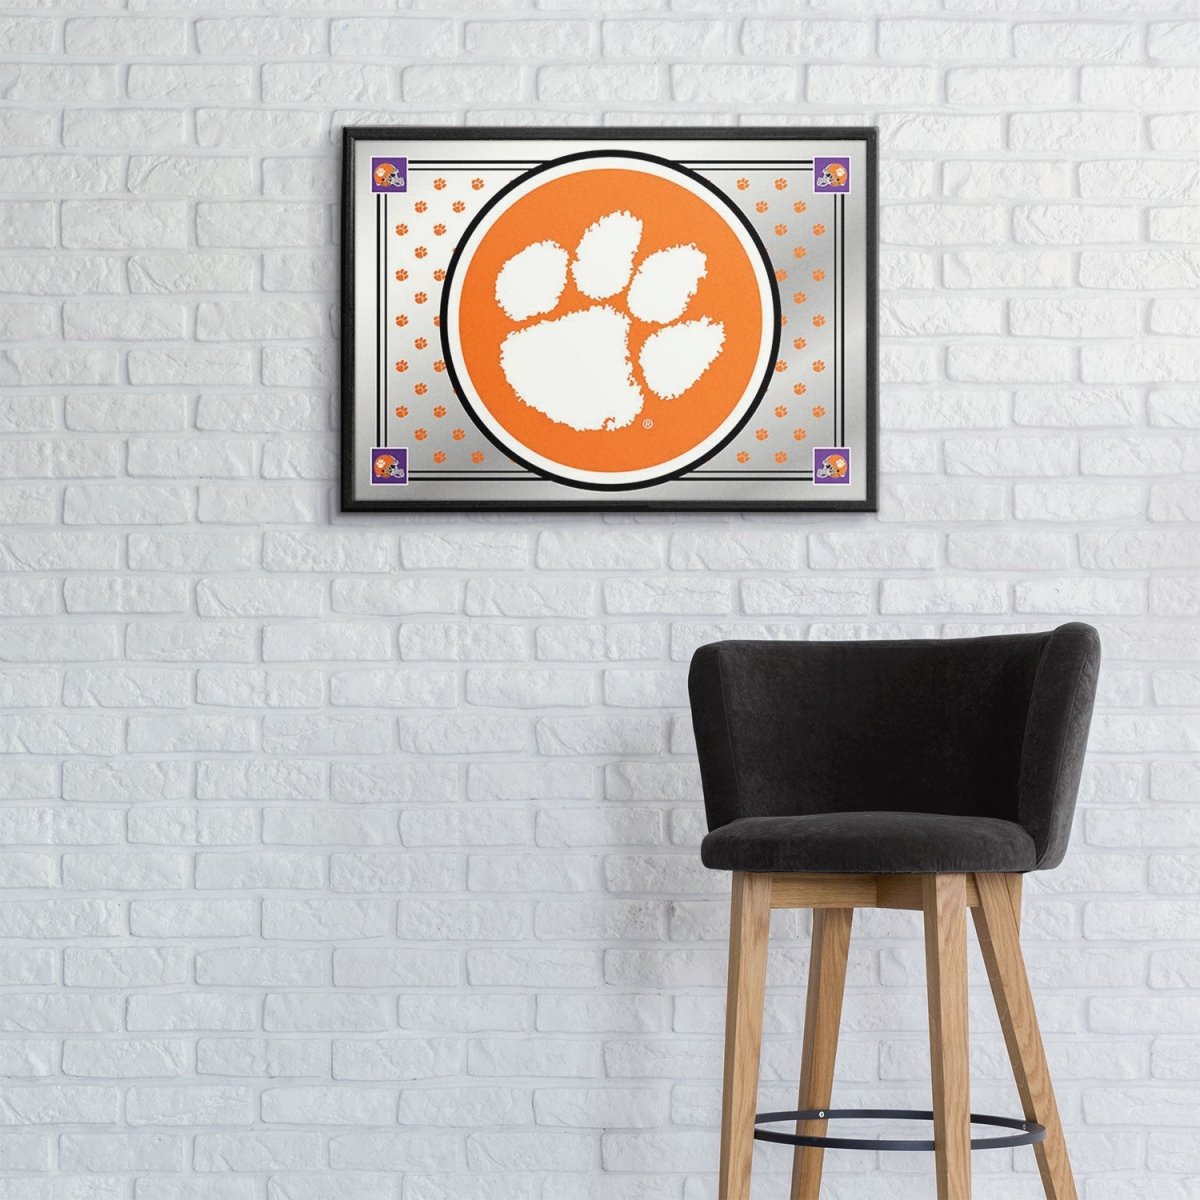 Clemson Tigers: Paw Print, Team Spirit - Framed Mirrored Wall Sign - The Fan-Brand